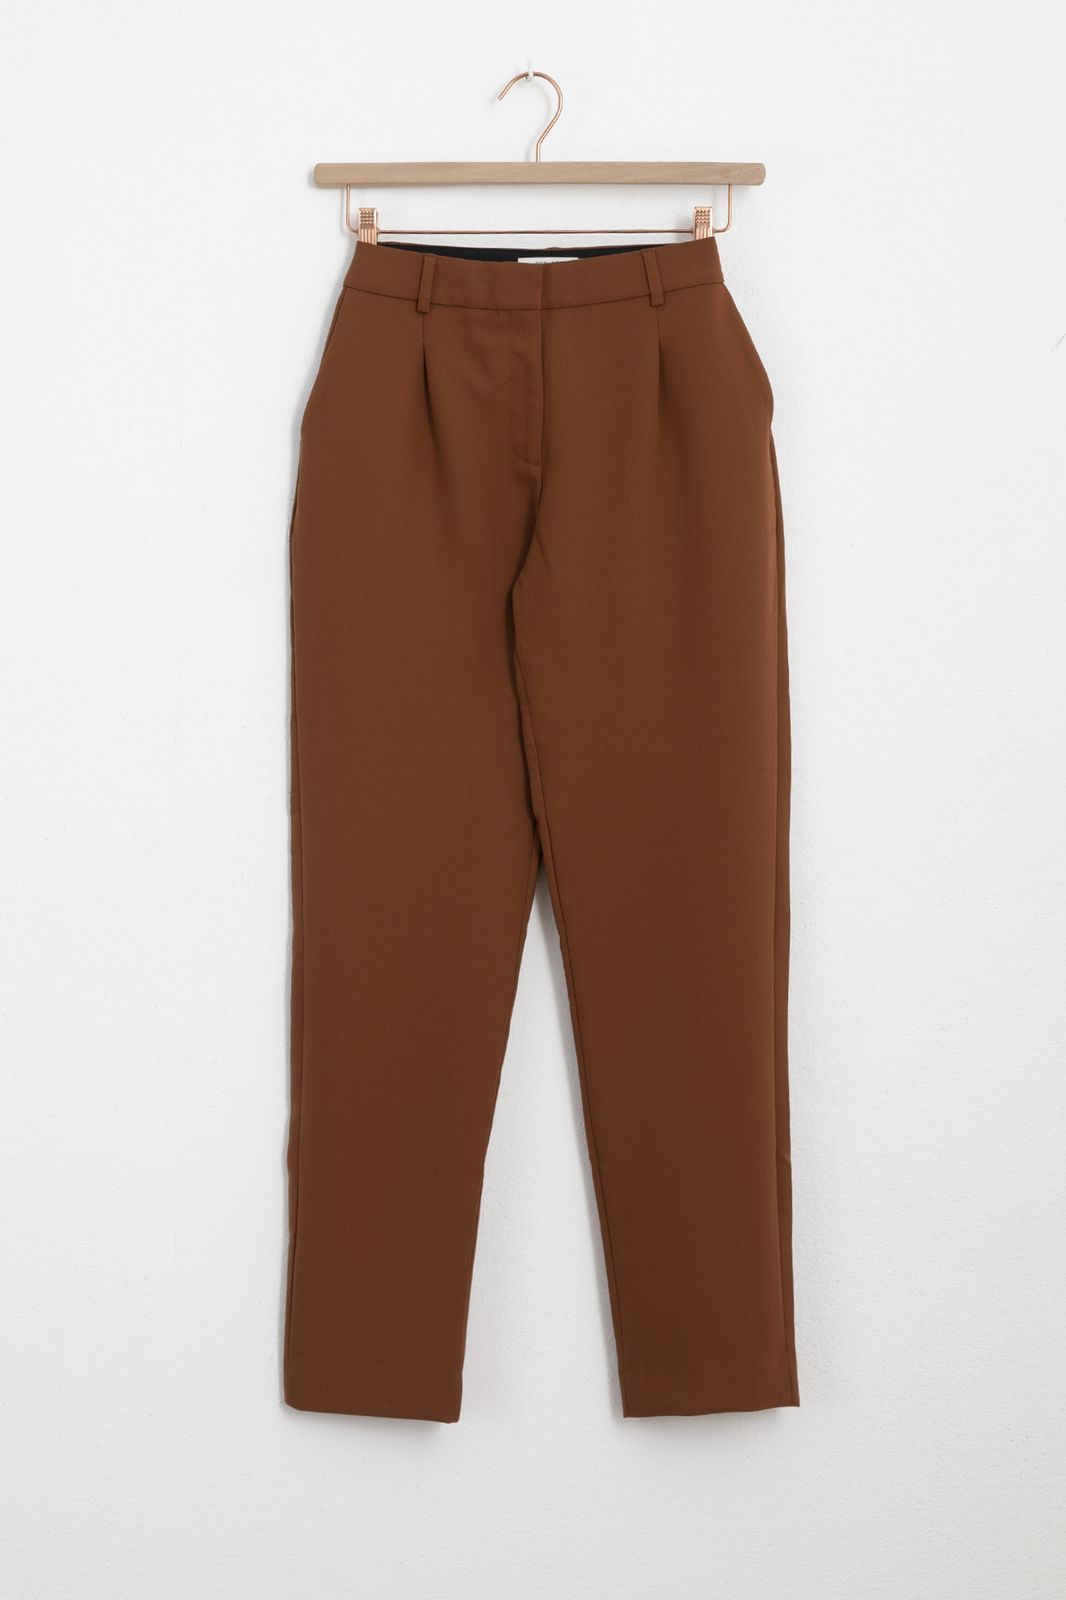 Bruine pantalon